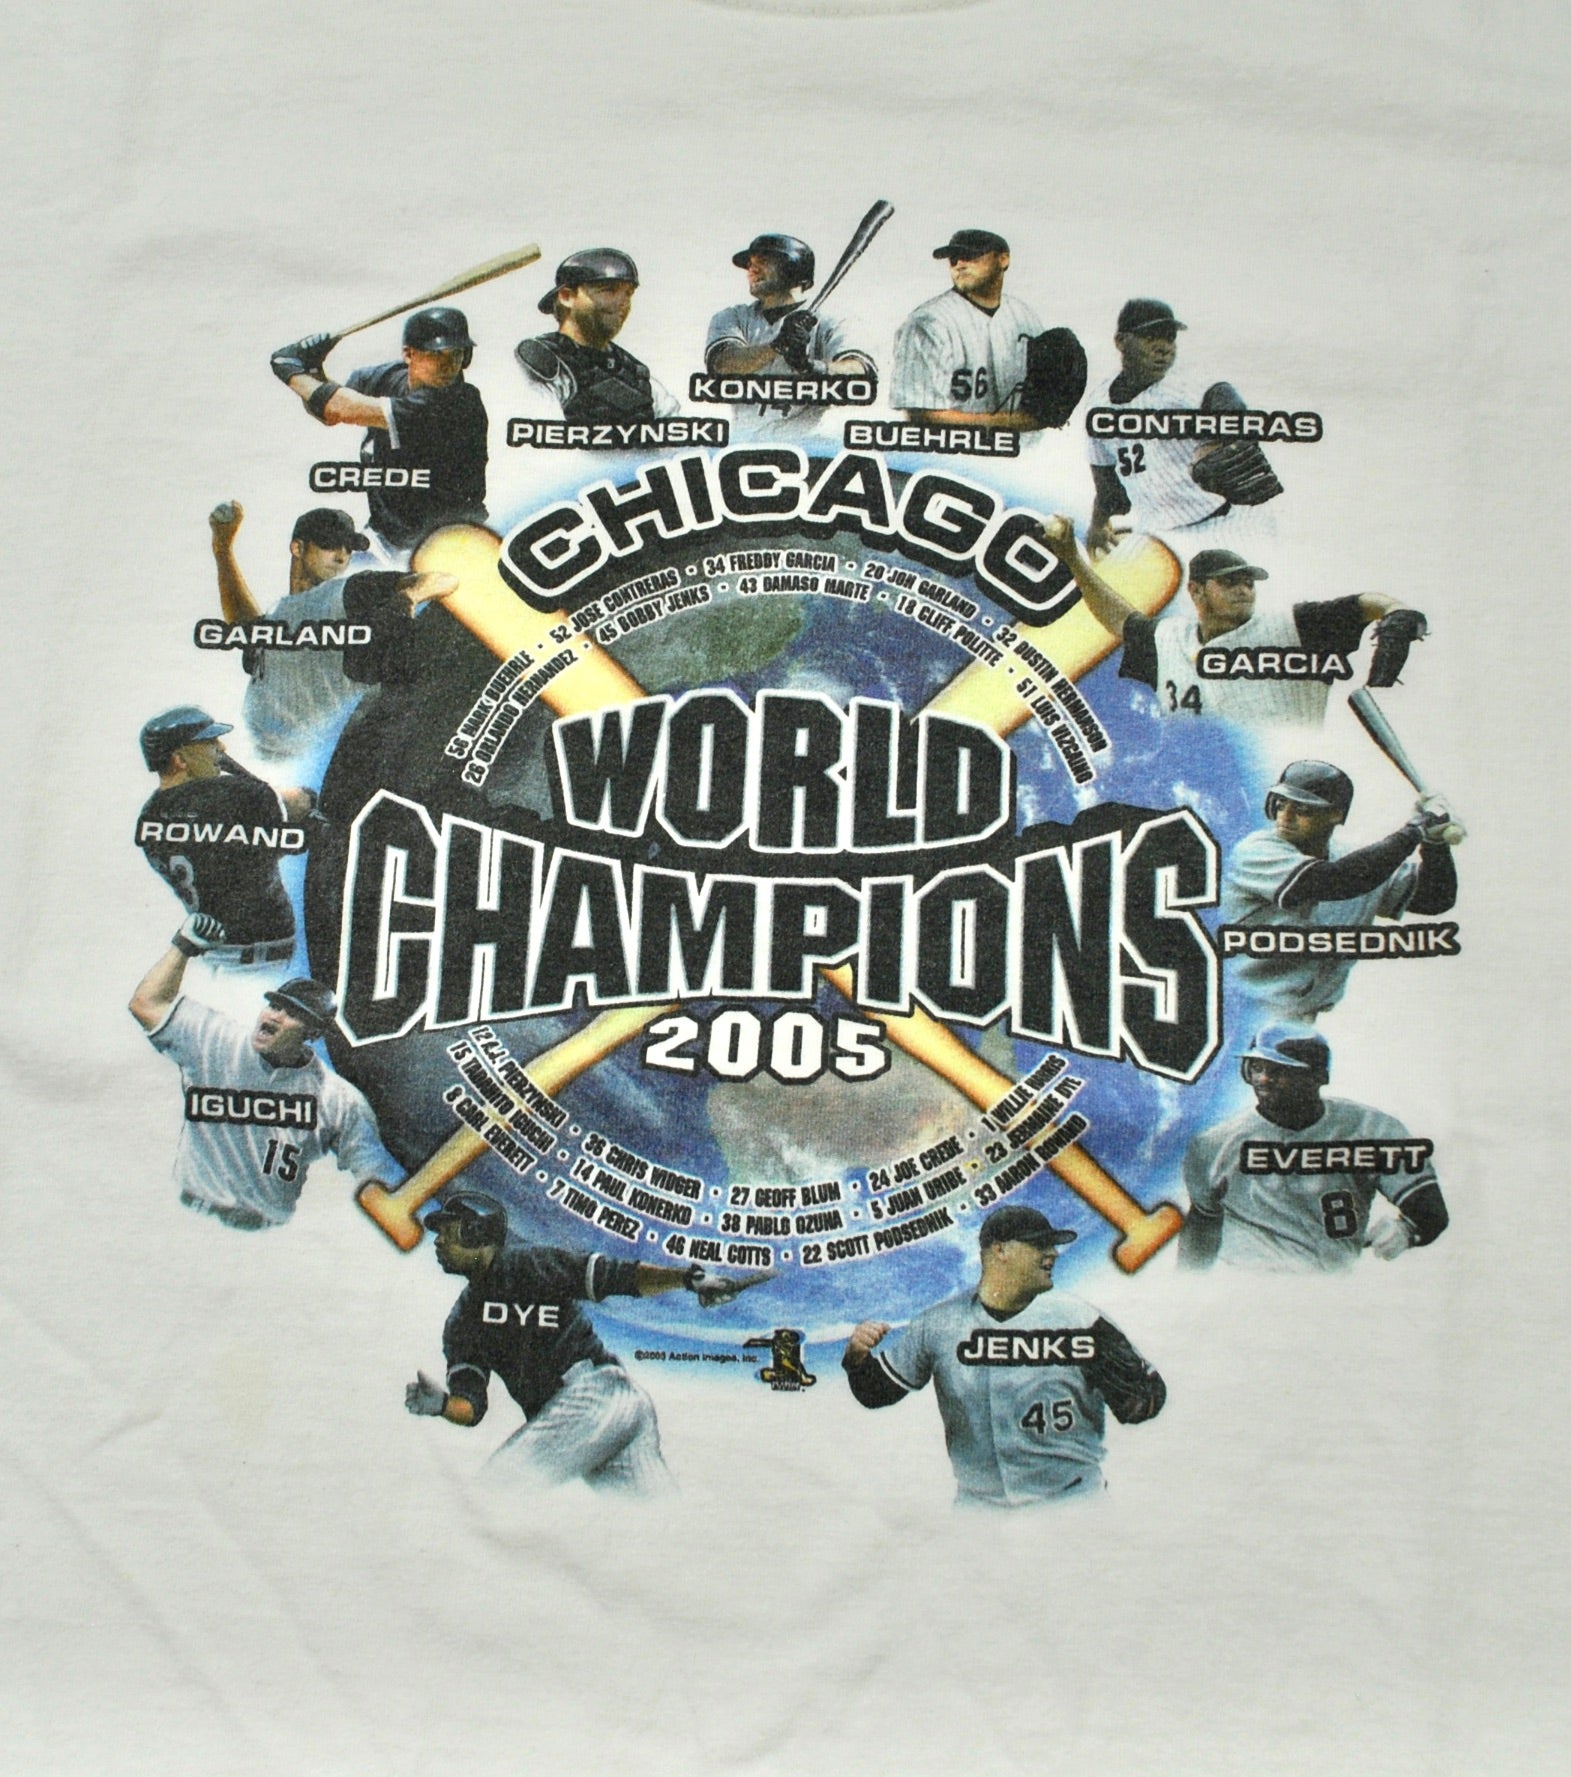 Vintage Chicago White Sox 2005 World Series Shirt Size X-Large